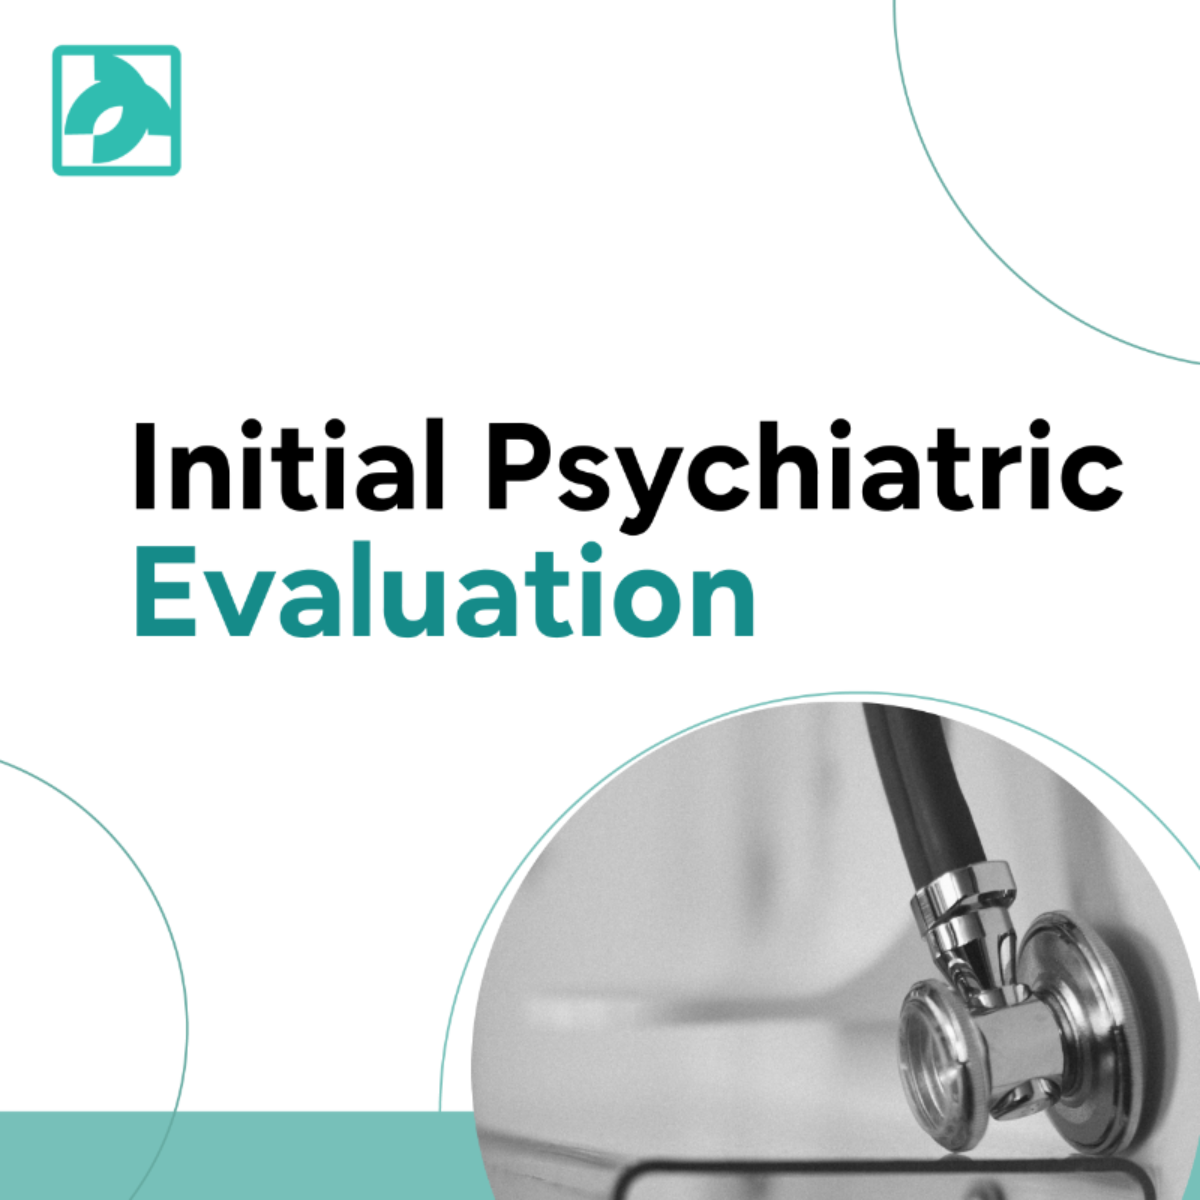 Initial Psychiatric Evaluation Template